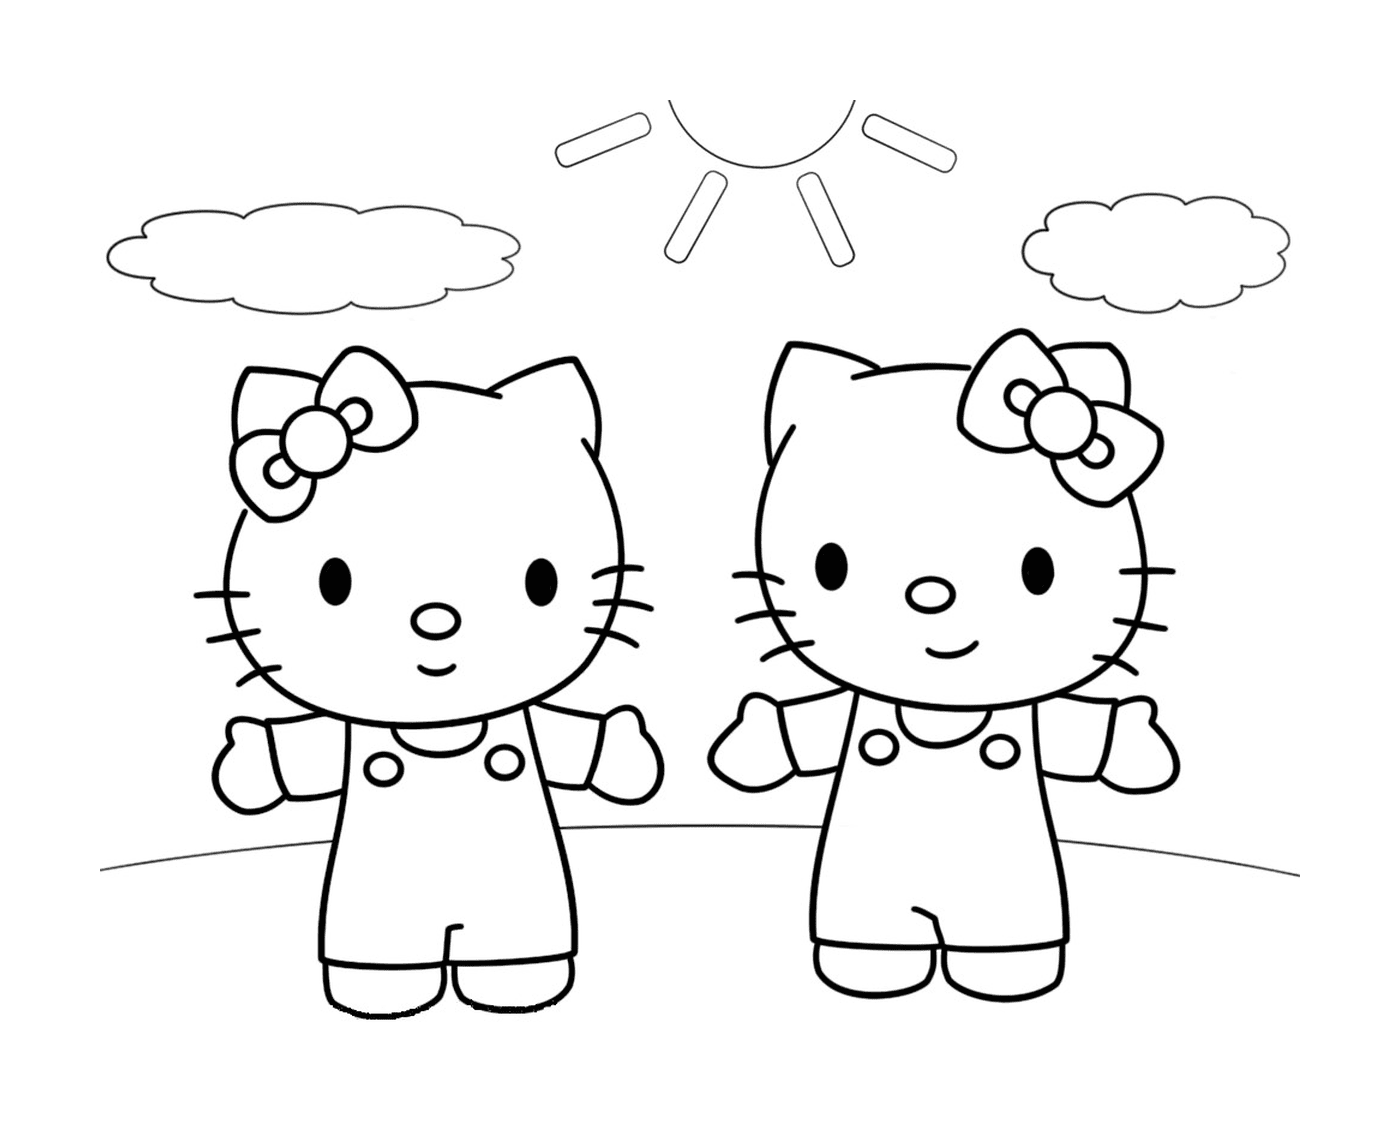   Deux Hello Kitty côte à côte 